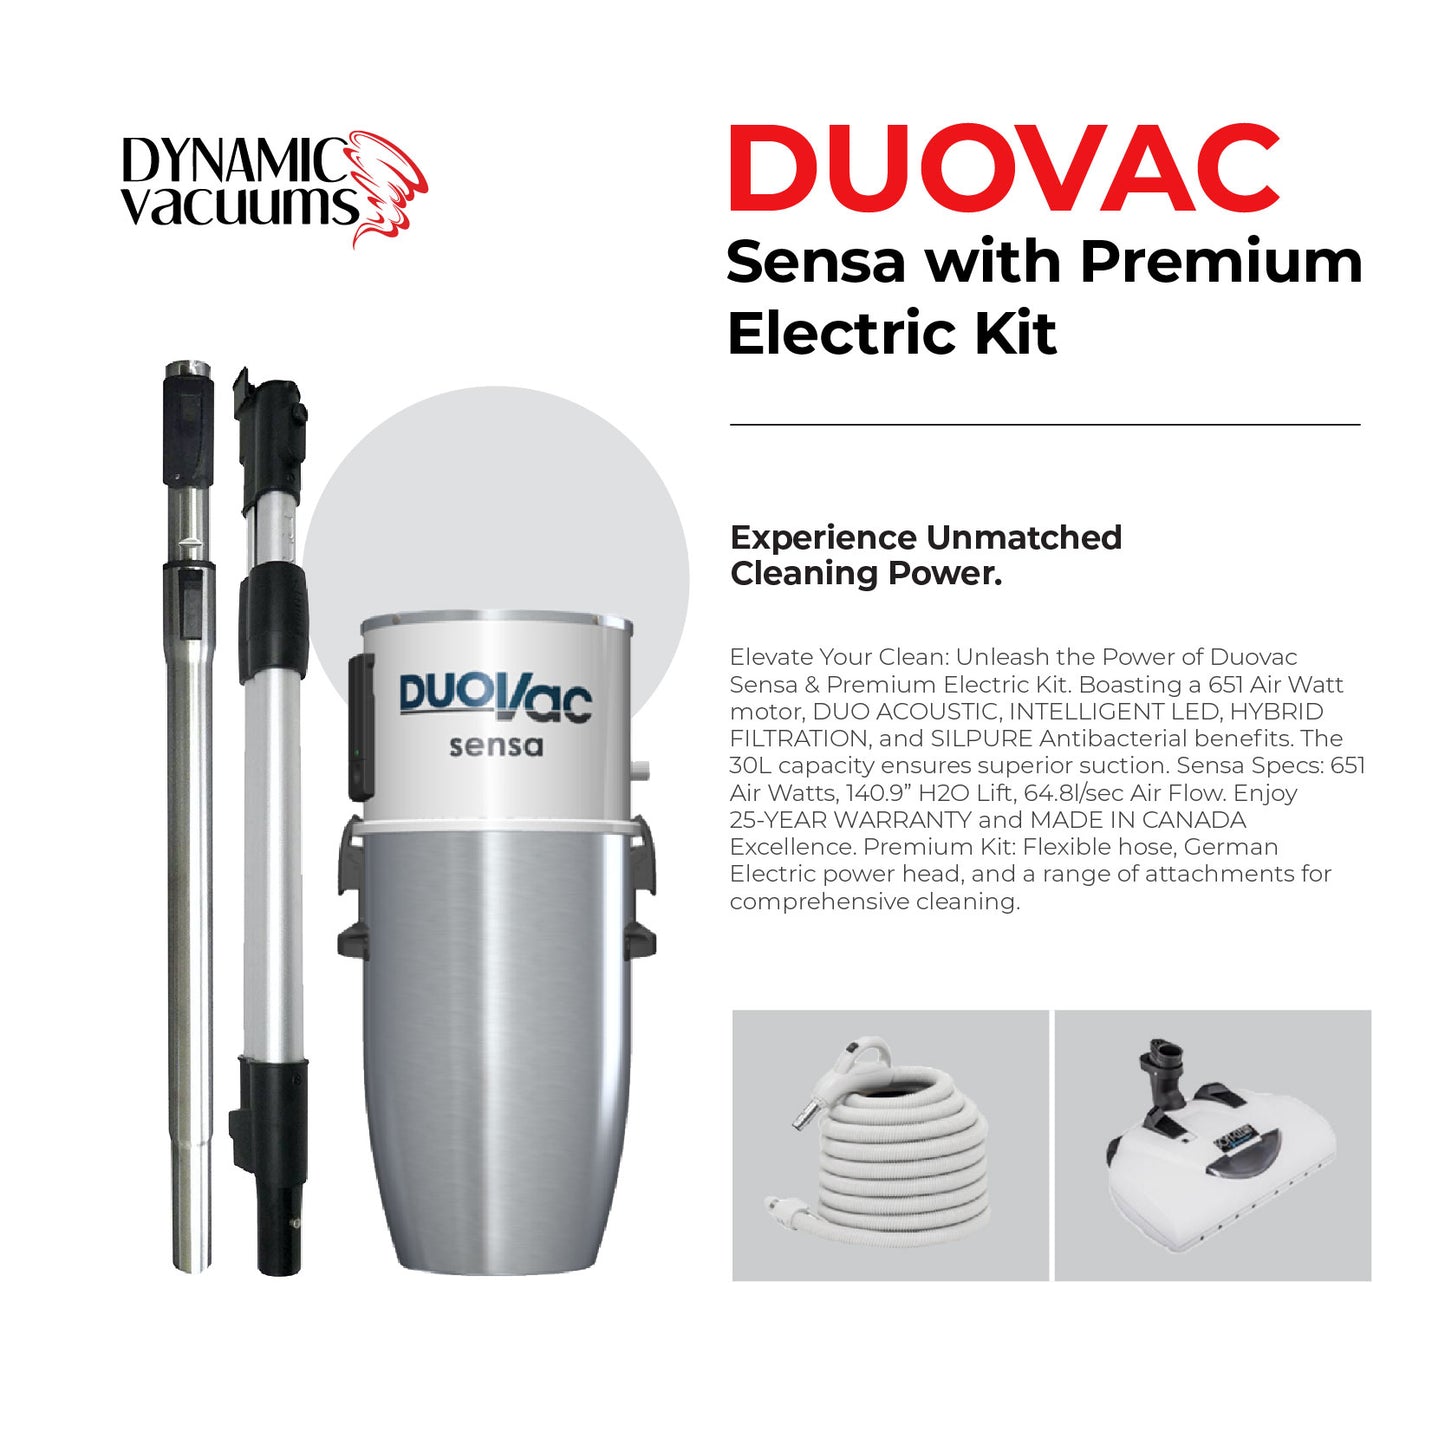 Duovac Sensa with Premium Electric Kit